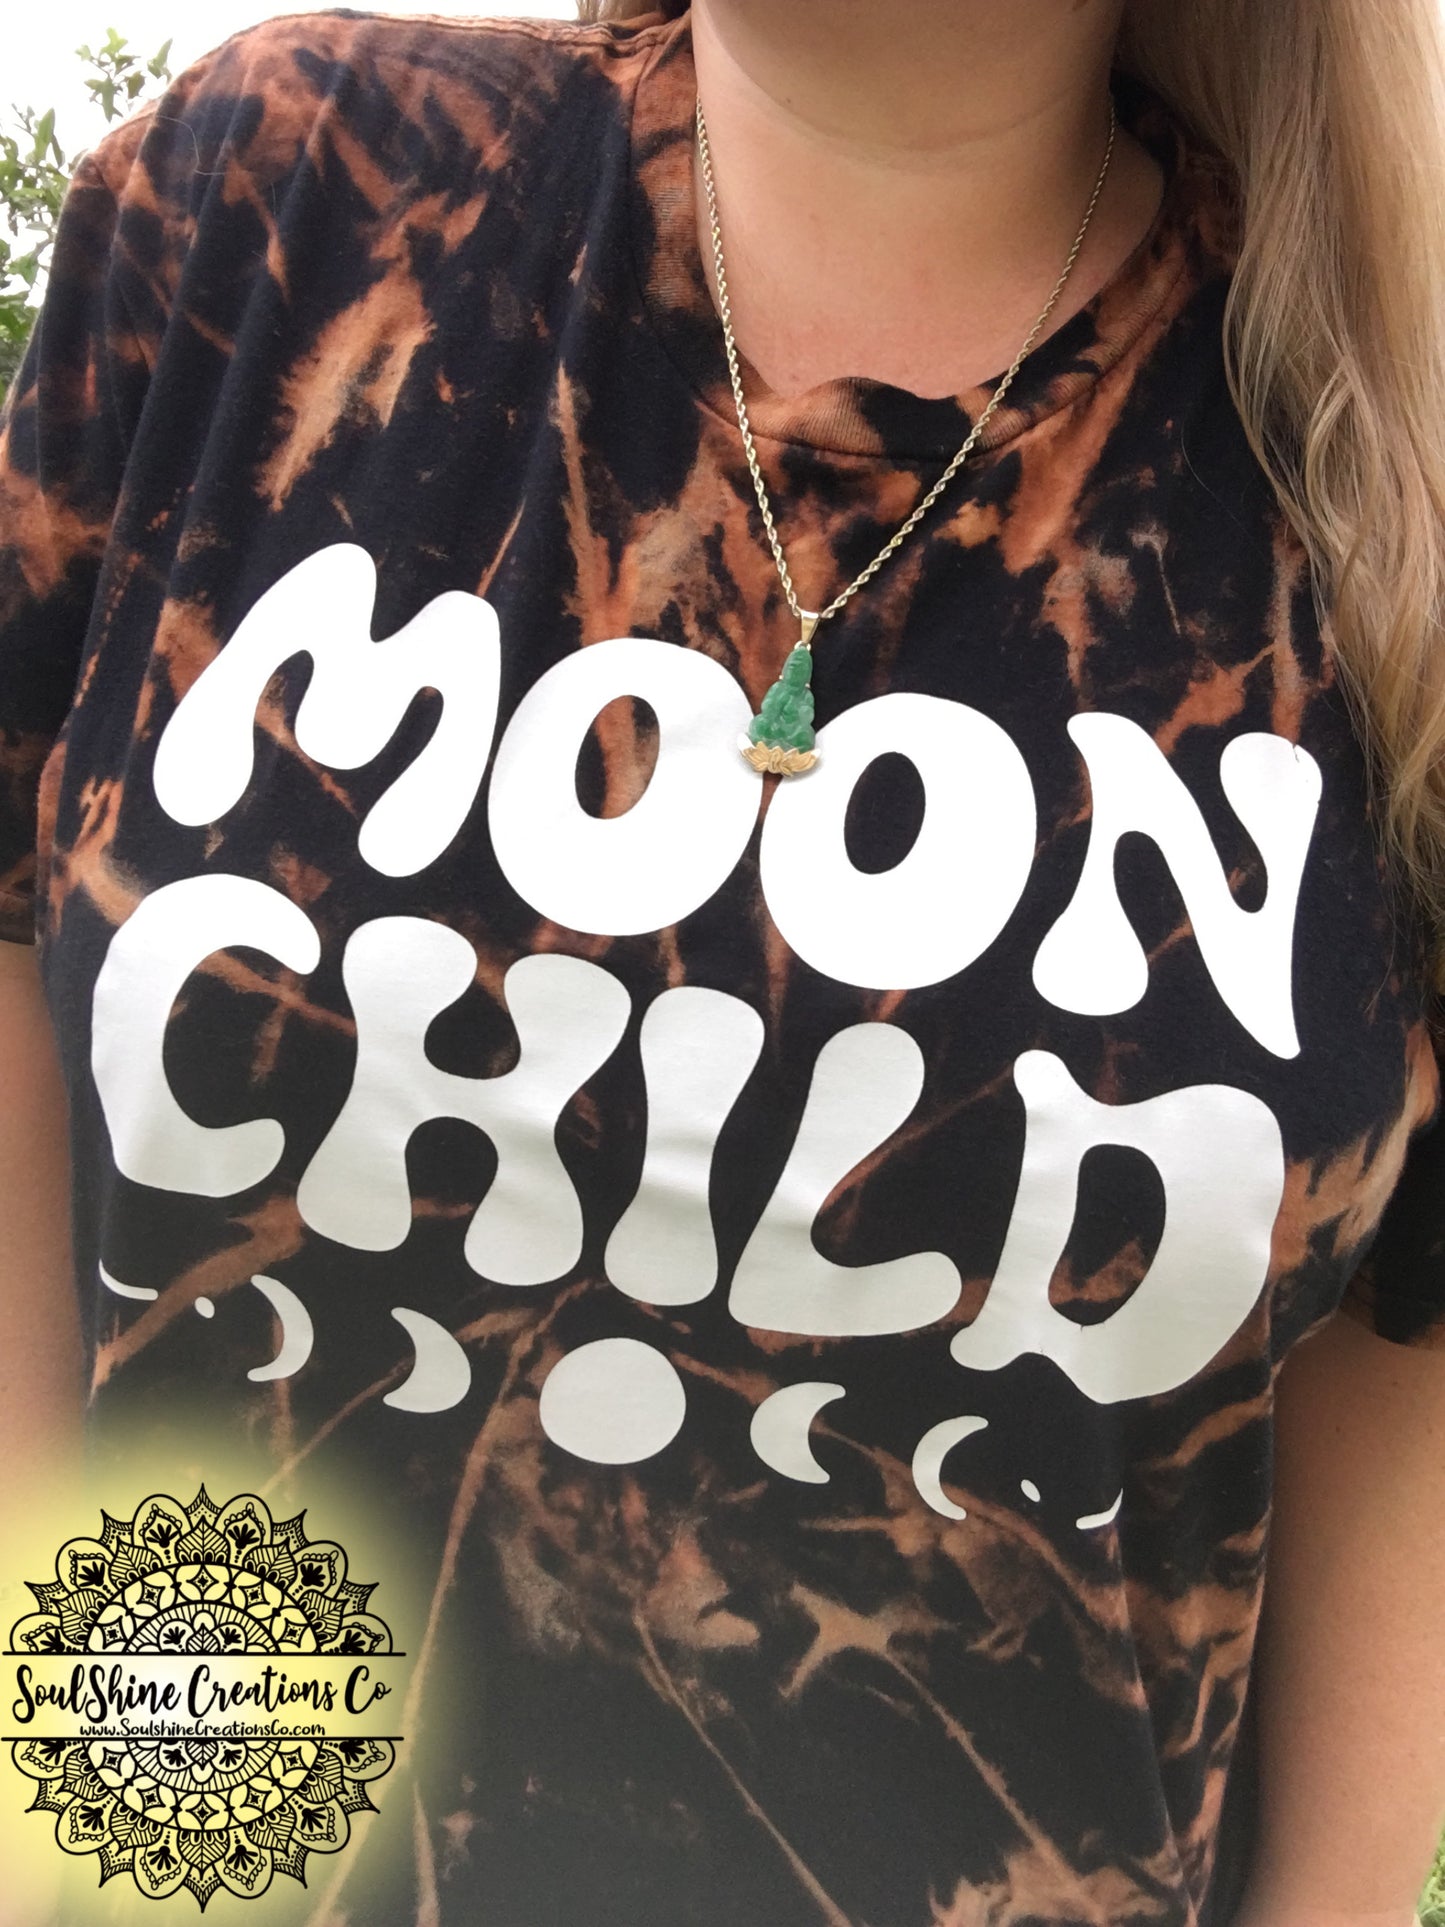 Moon Child Grunge Bleached Shirt